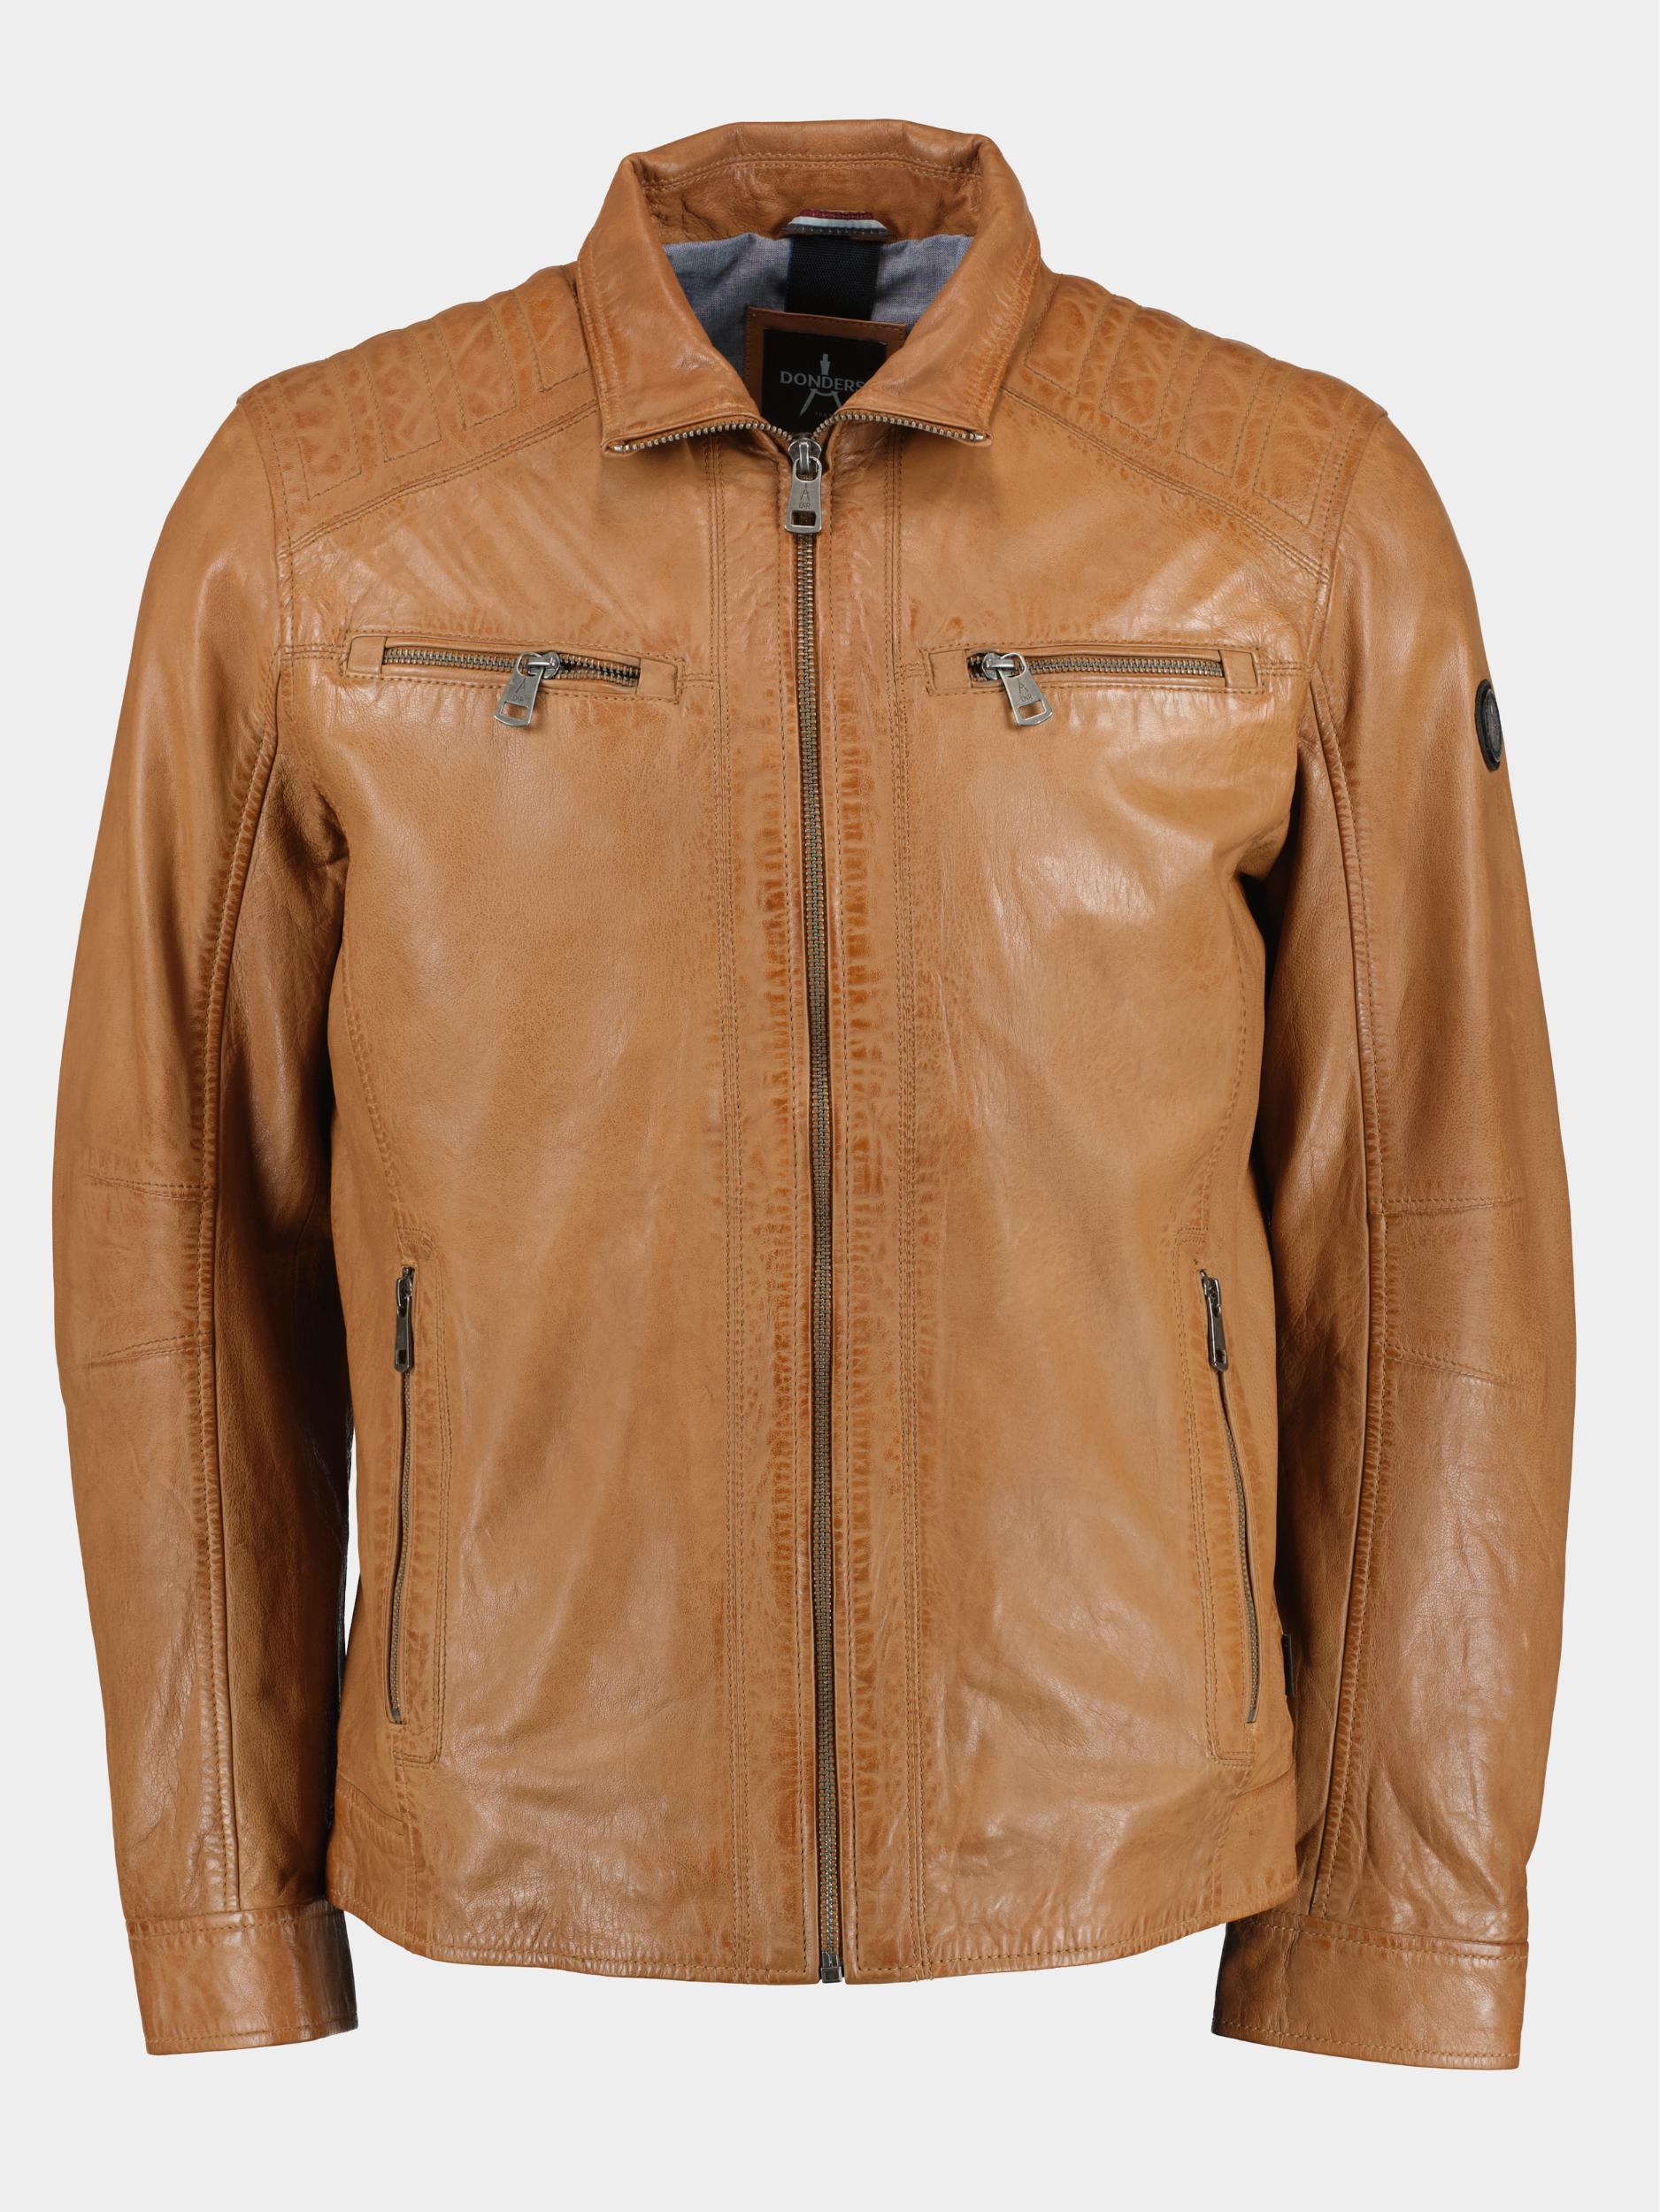 Afbeelding van DNR Lederen jack leather jacket 52347/310